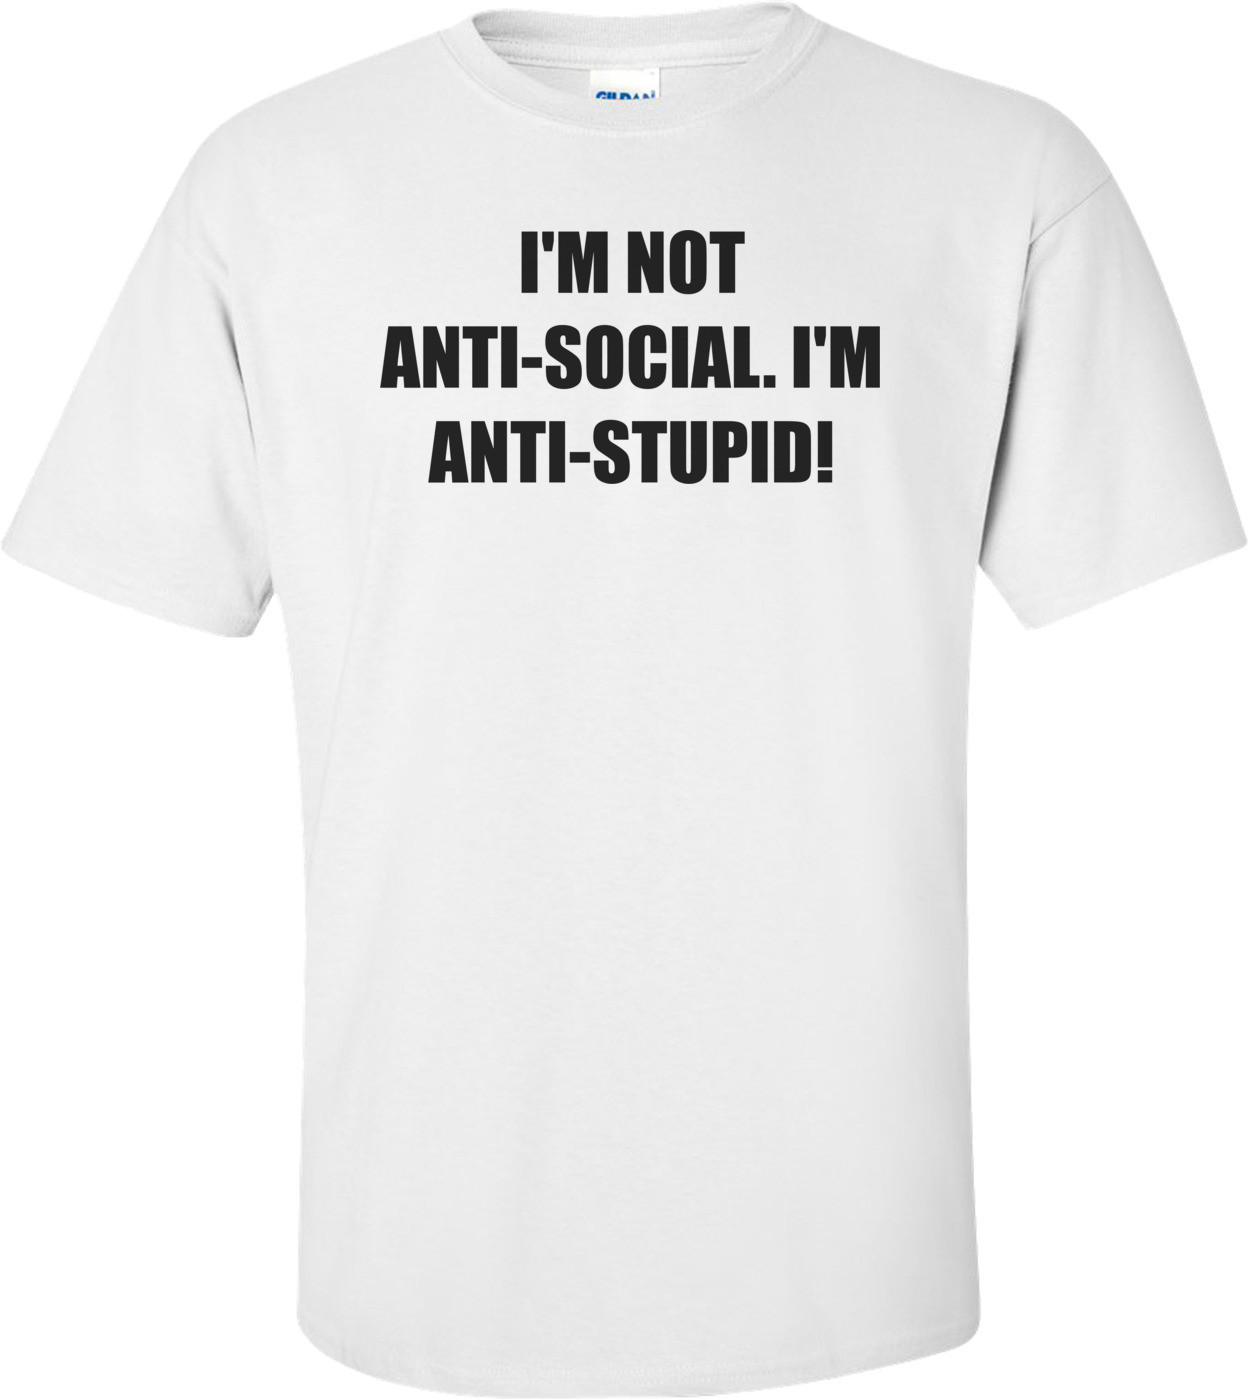 I'M NOT ANTI-SOCIAL. I'M ANTI-STUPID!